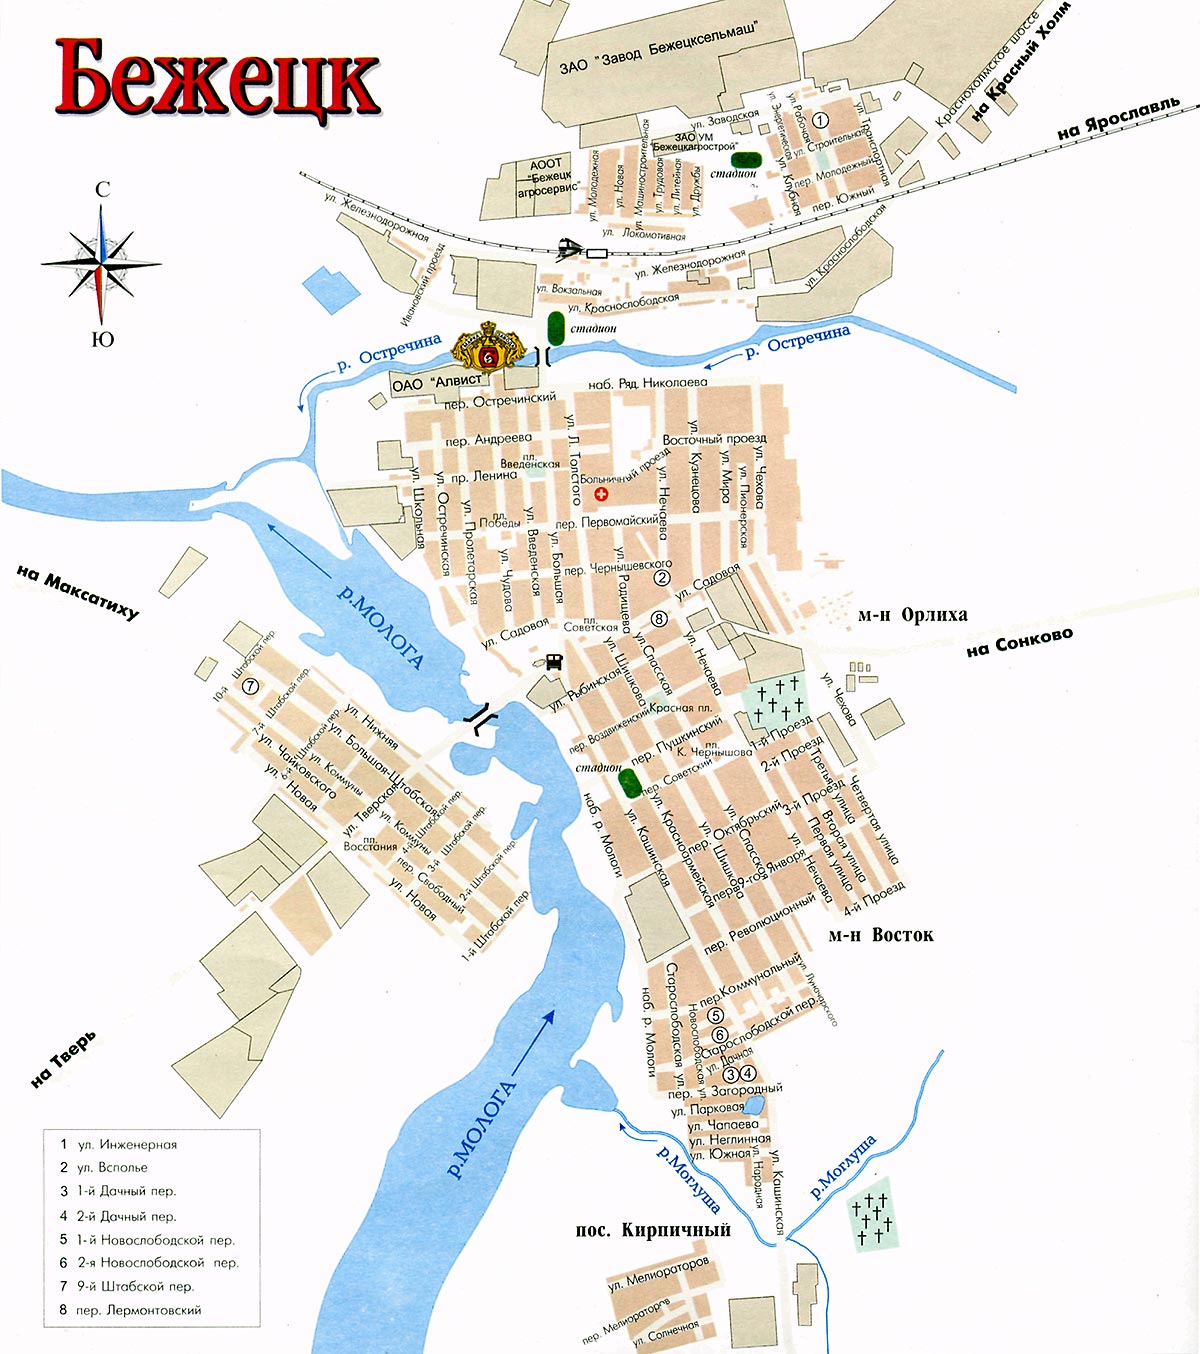 Подробная карта Бежецка